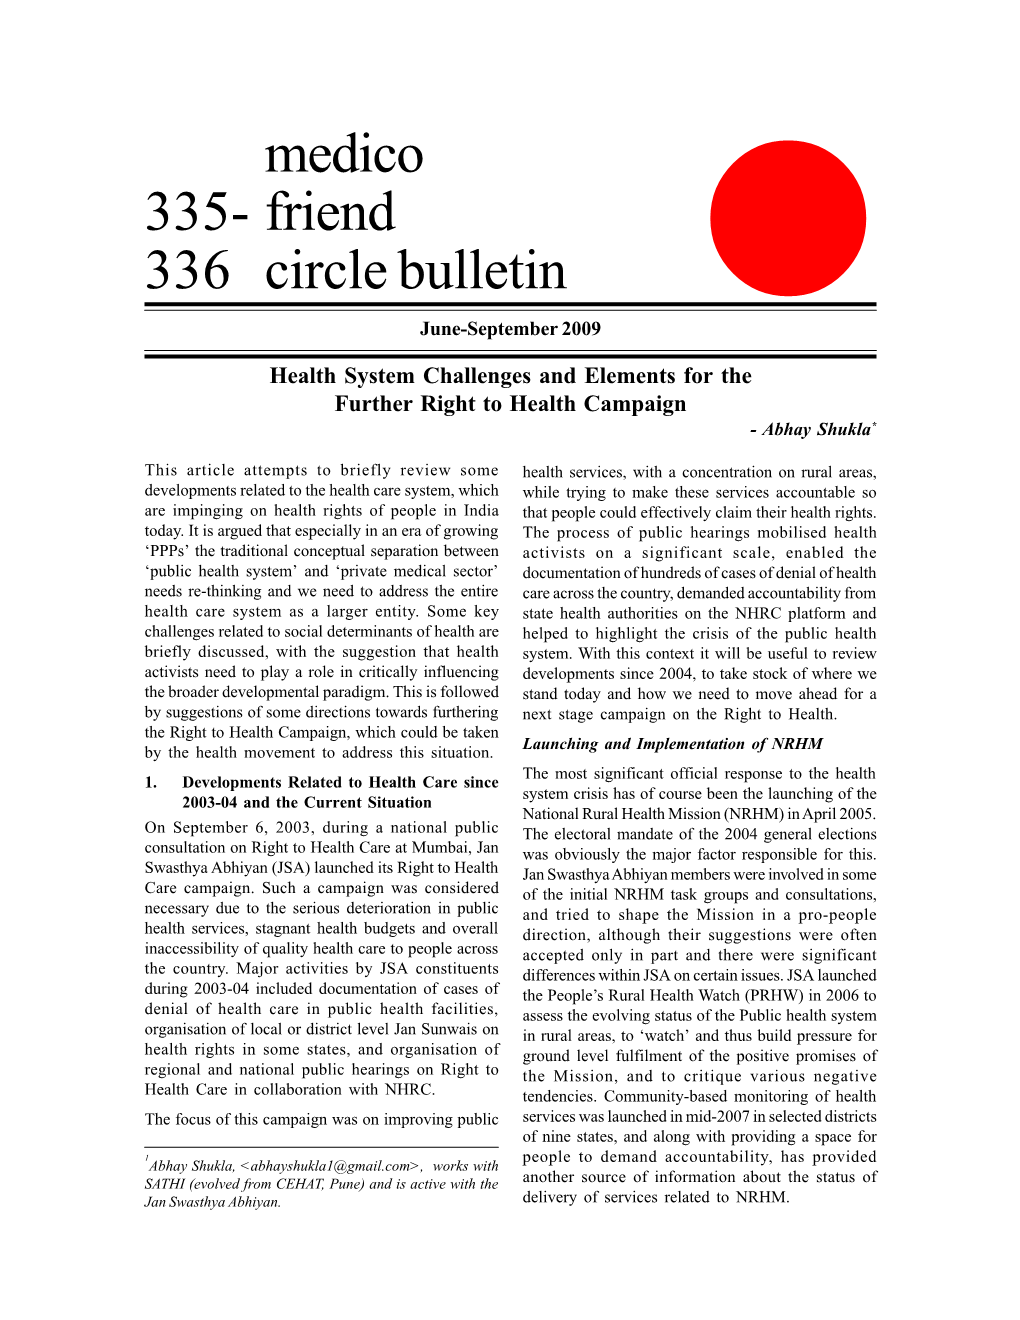 Medico 335- Friend 336 Circle Bulletin June-September 2009